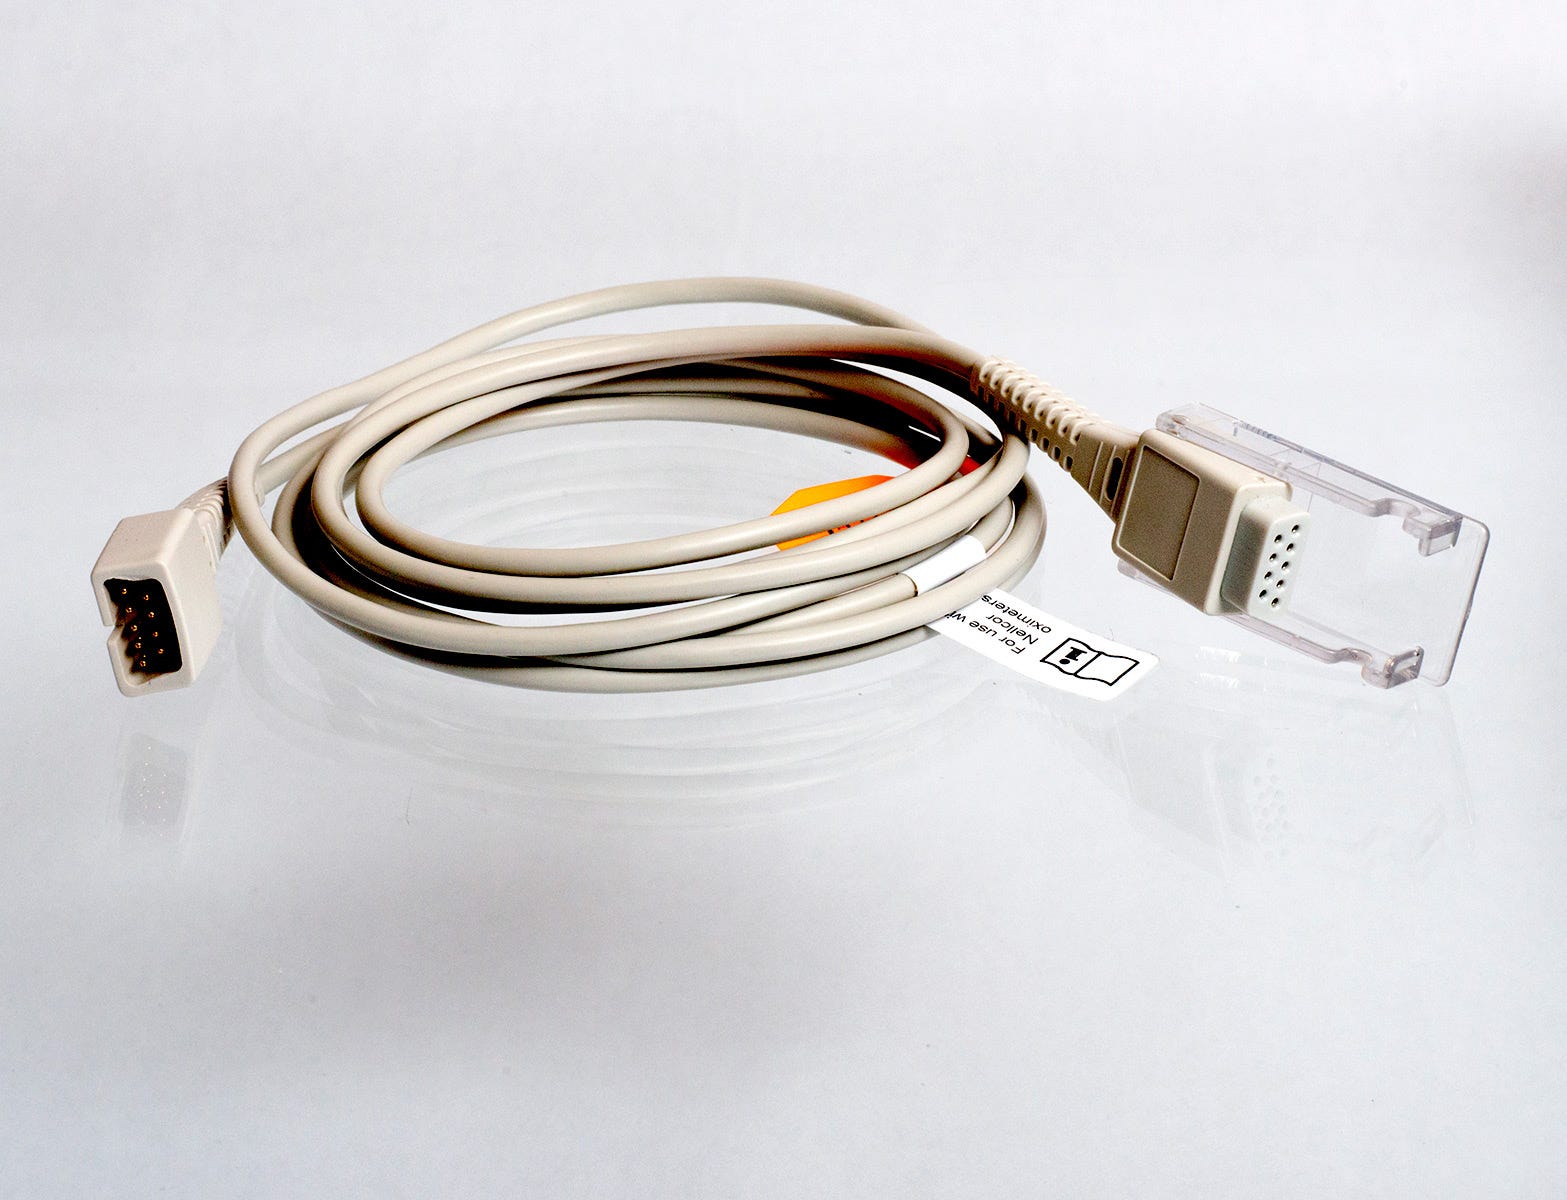 SpO2 Extender Cable 8' Length, Nellcor for ZOE Monitors